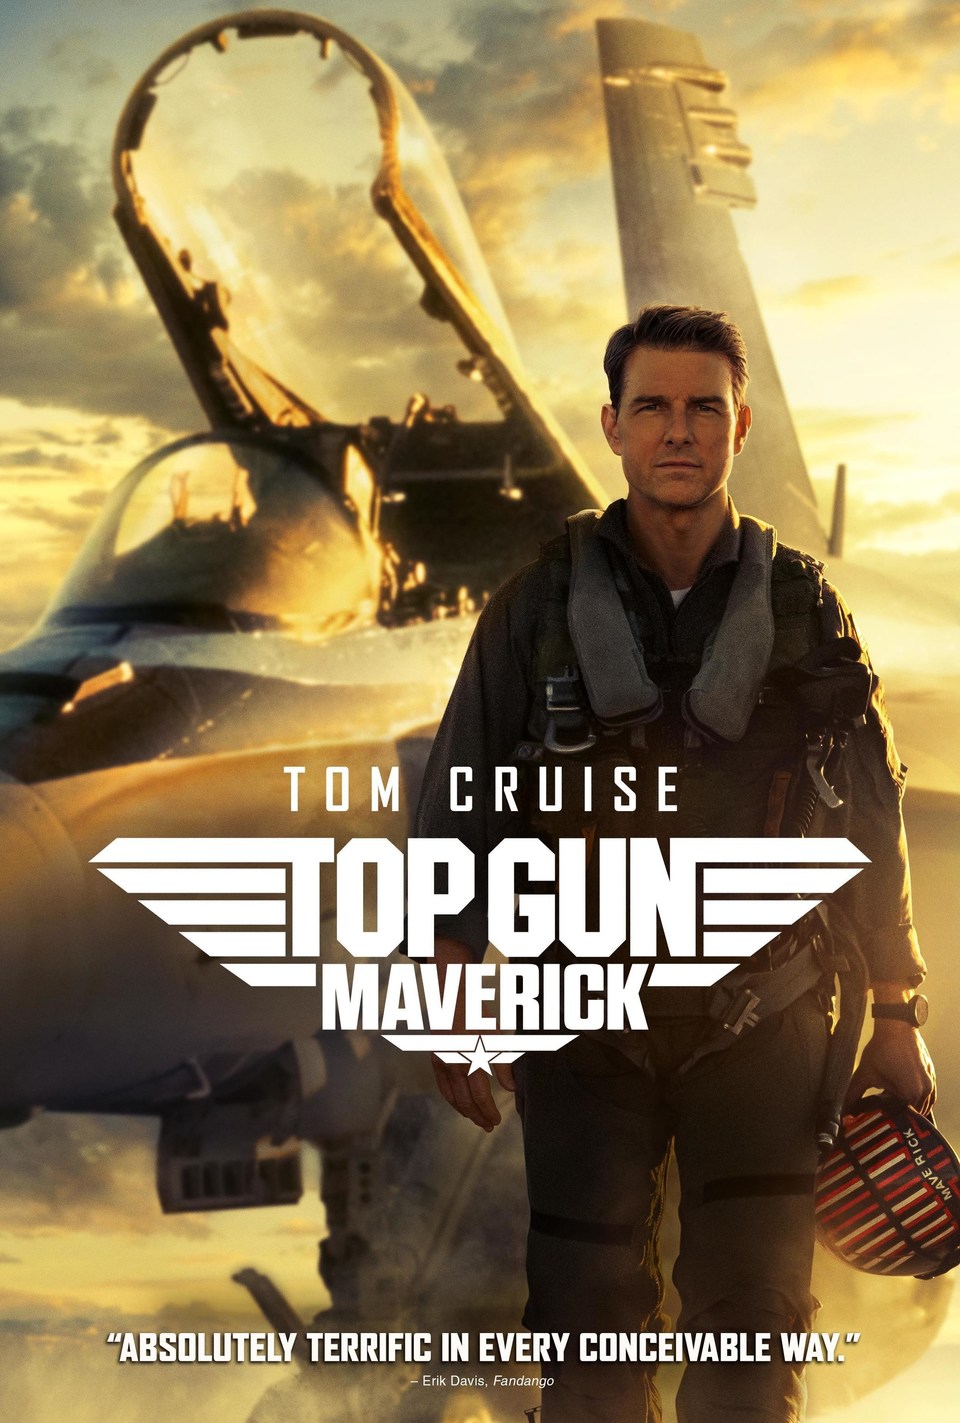 Film Top Gun: Maverick